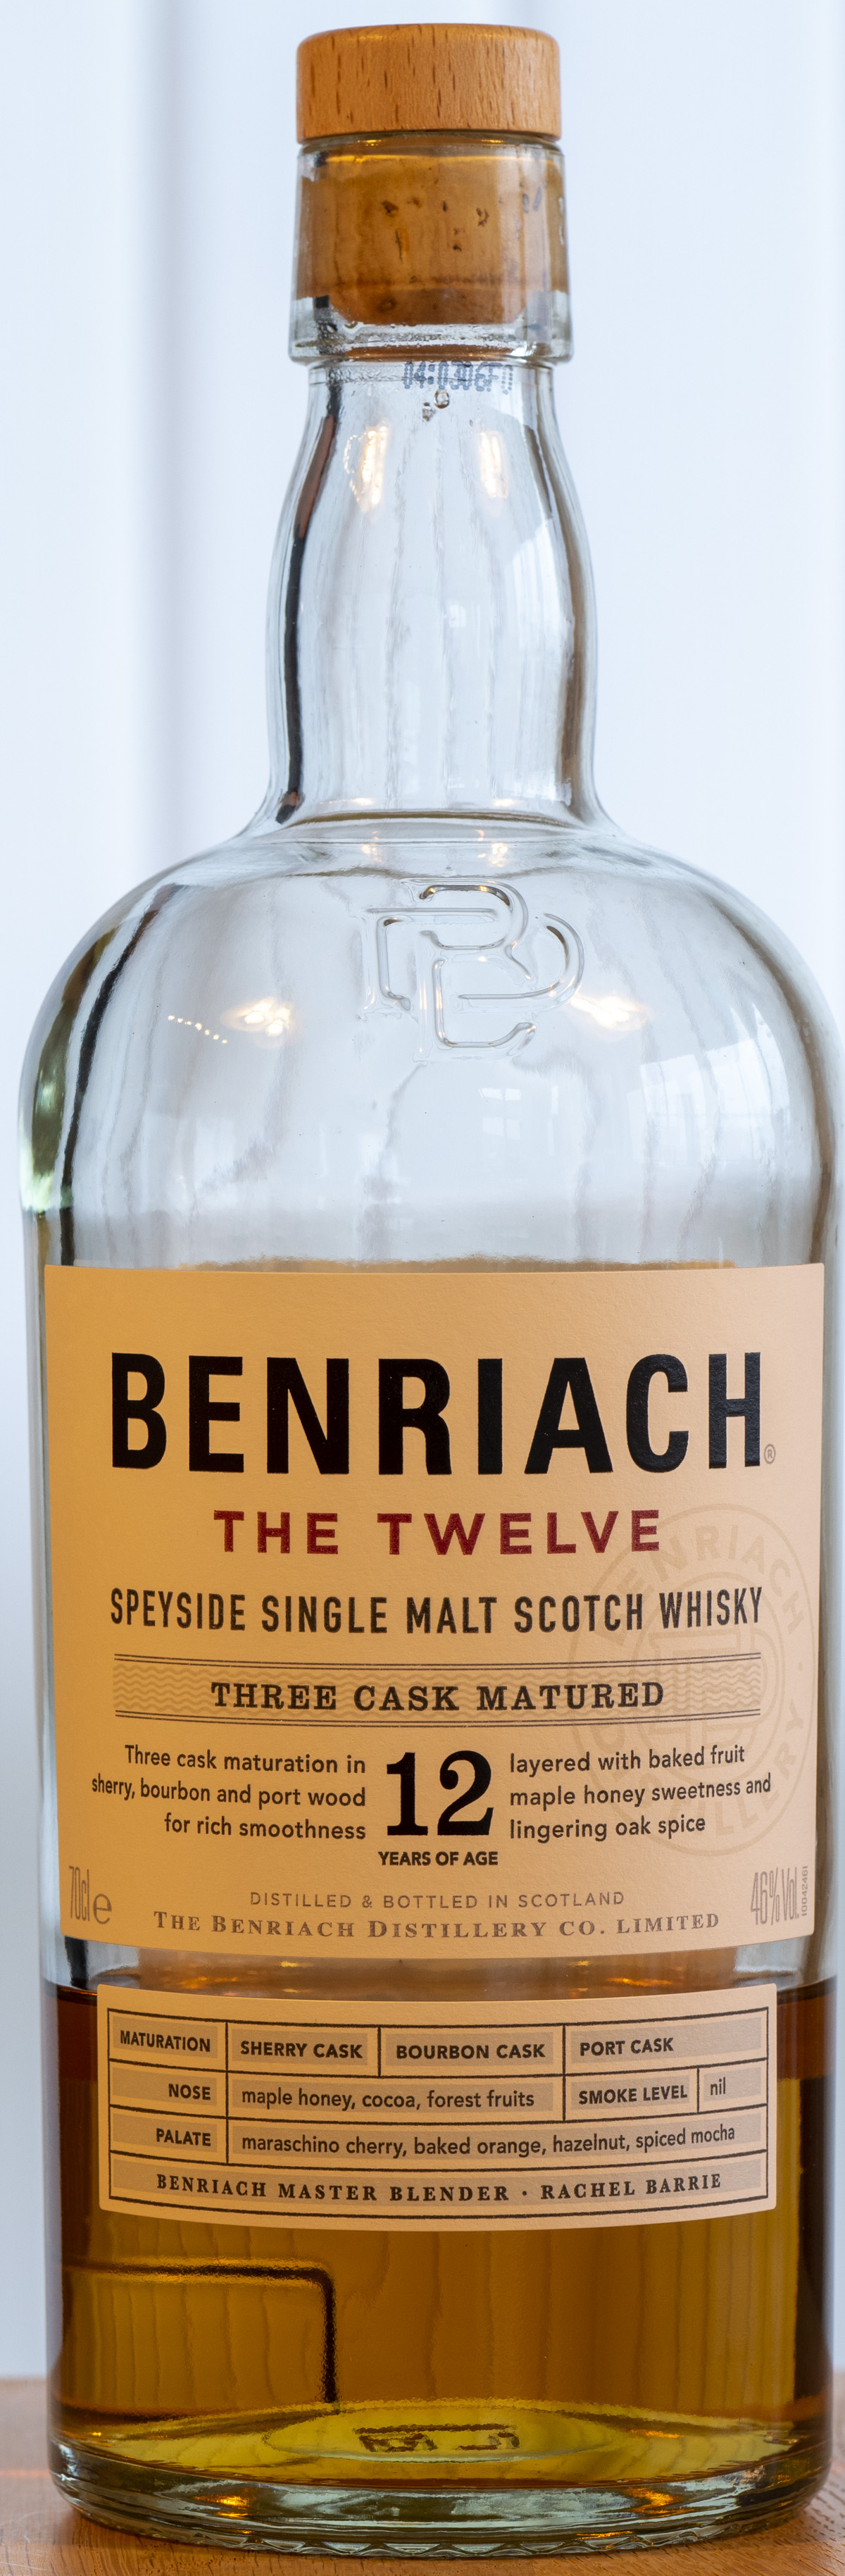 Billede: PHC_3897 - Benriach The Twelve - bottle front.jpg